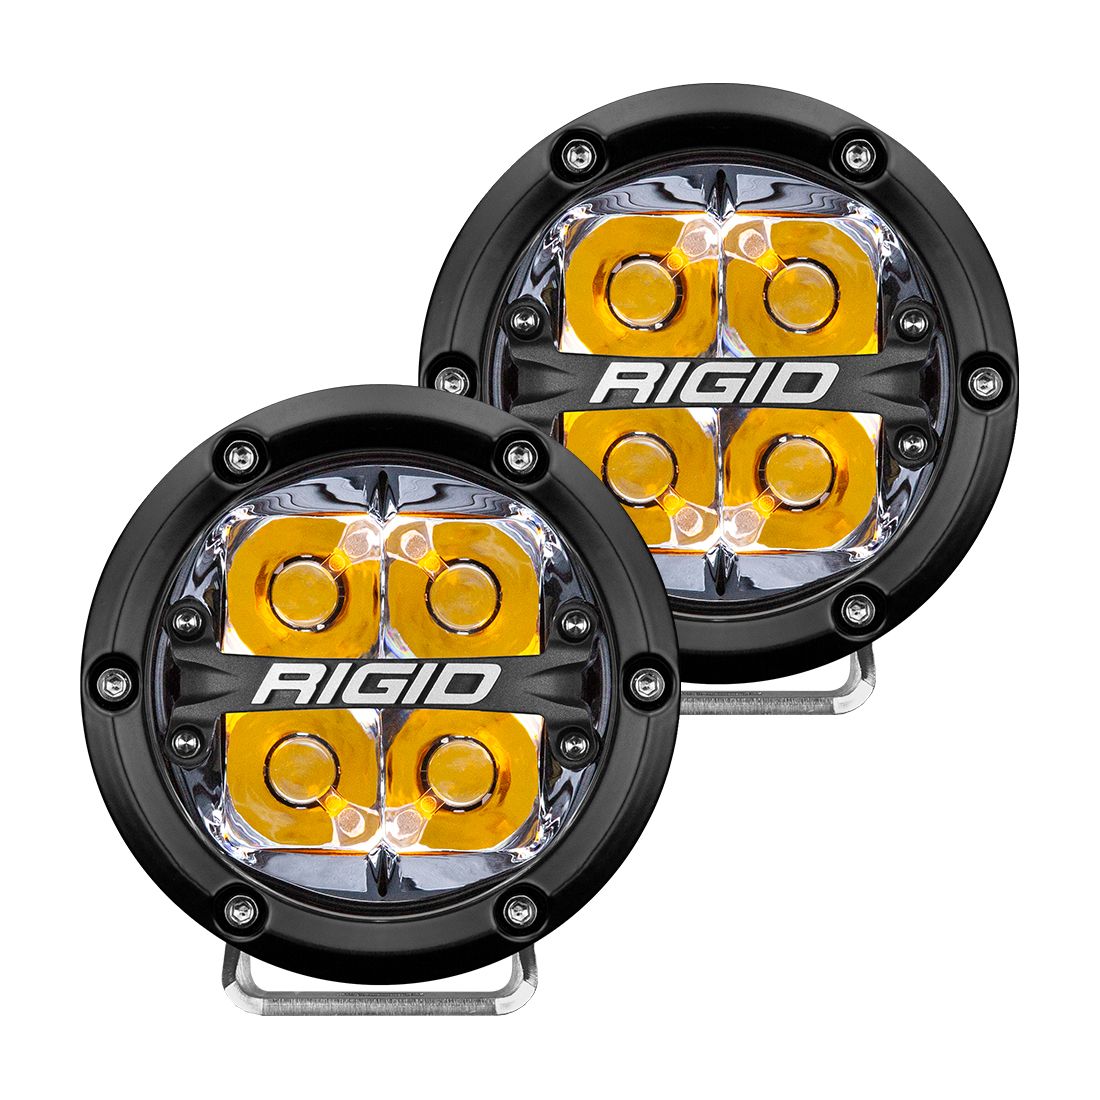 Rigid 360 - Series 4" Round Pair of Lights